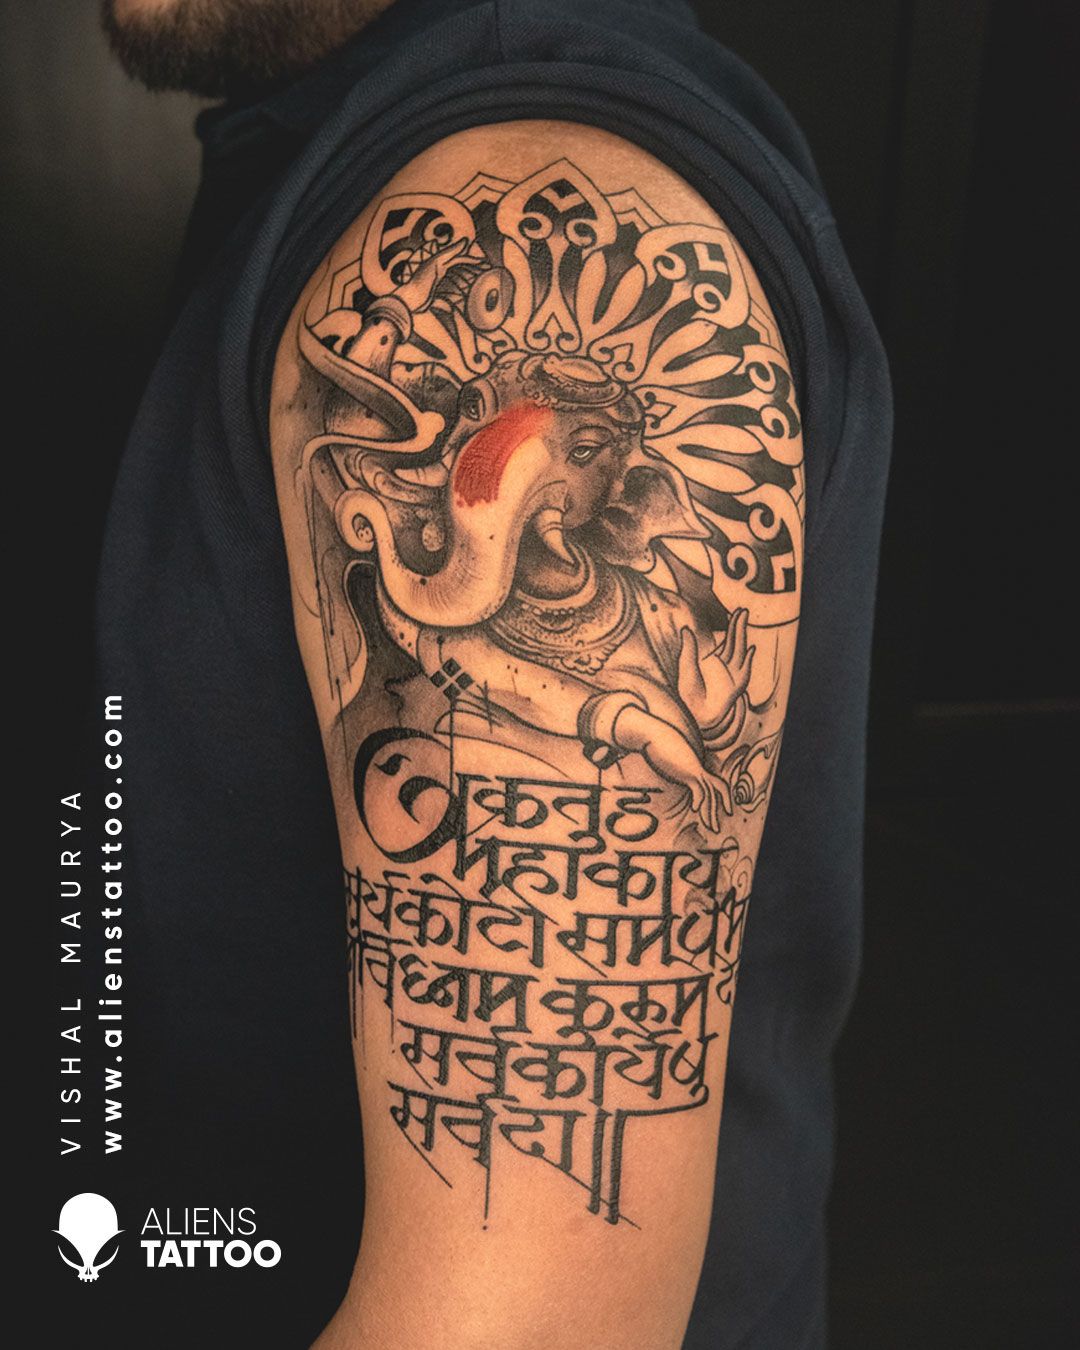 Awesome Ink's Art Tattoo - ..shree.. ##...Ganesha...##... | Facebook